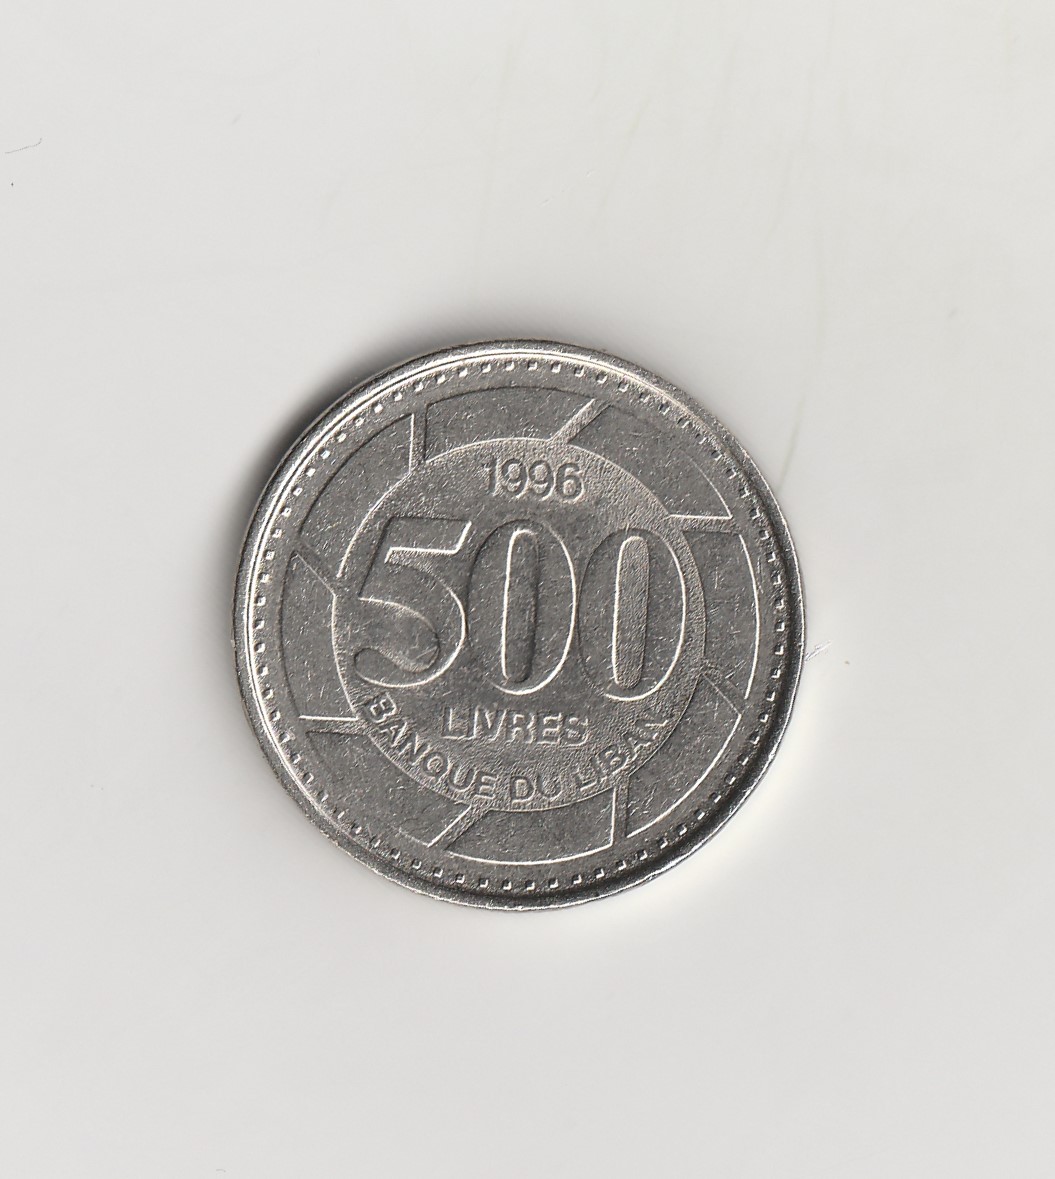  500 Livres Libanon 1996/1997 (M031)   